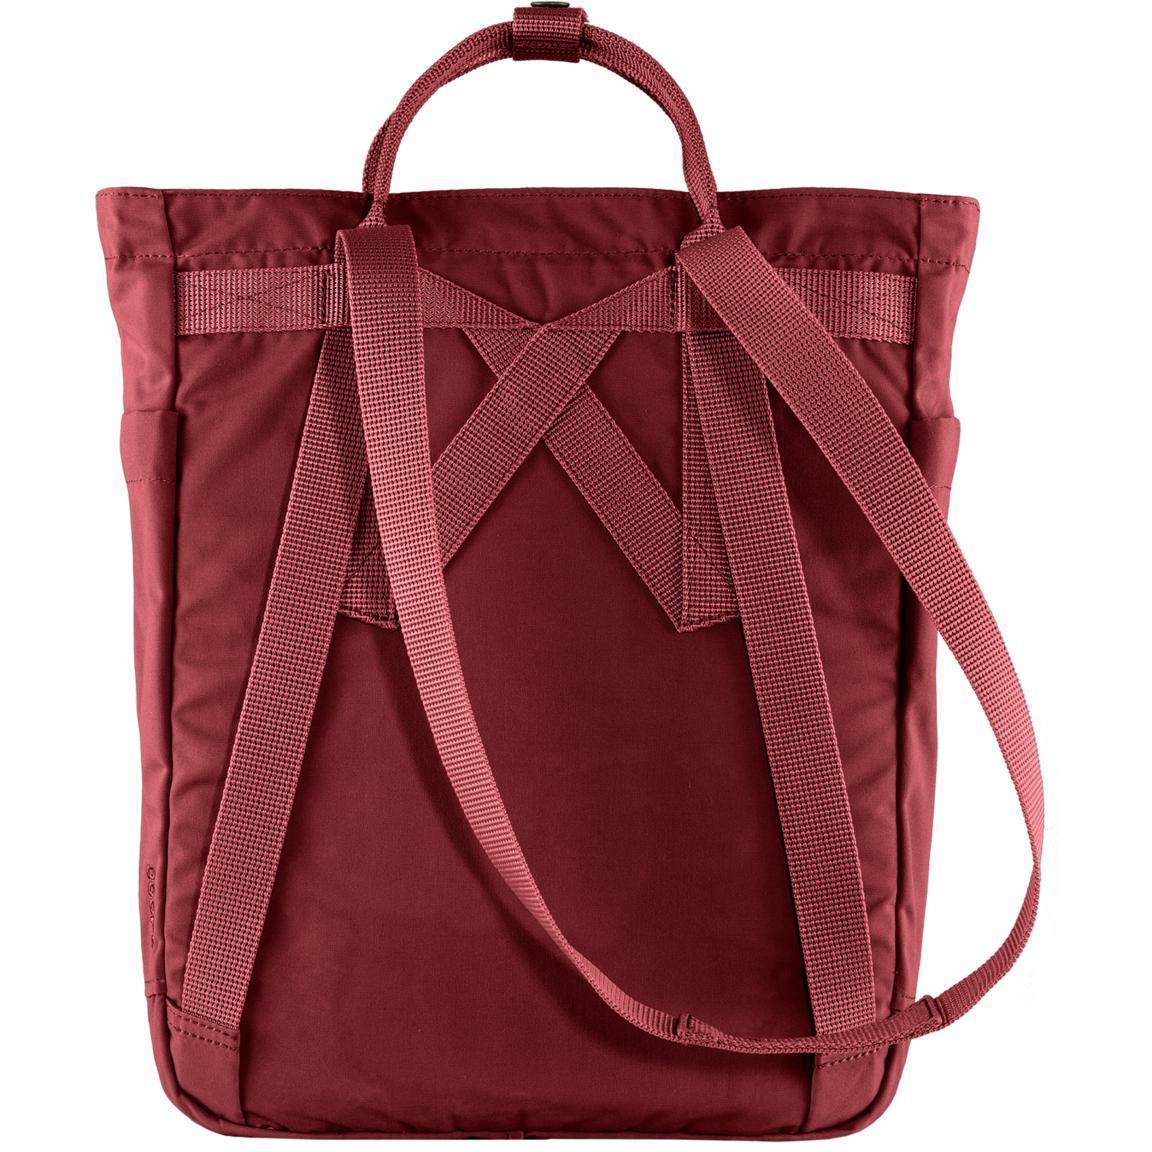 Taschenrucksack dunkelrot Fjällräven Totepack Ox Red Handtasche